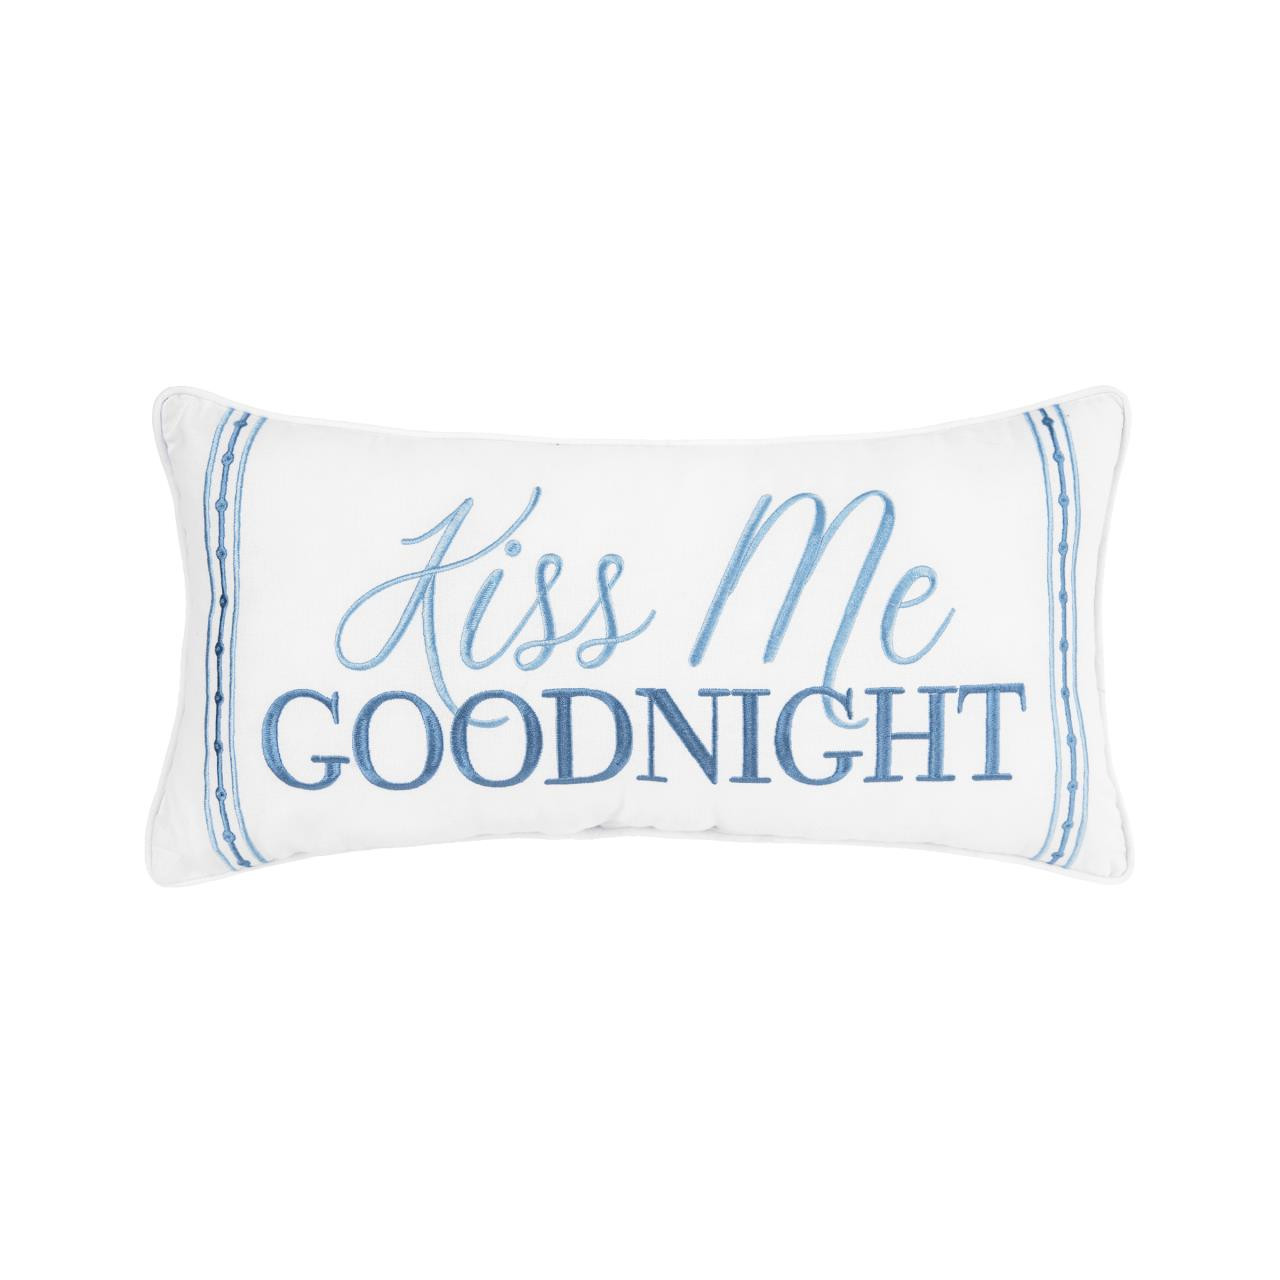 Kiss Me Goodnight Pillow - 008246314677